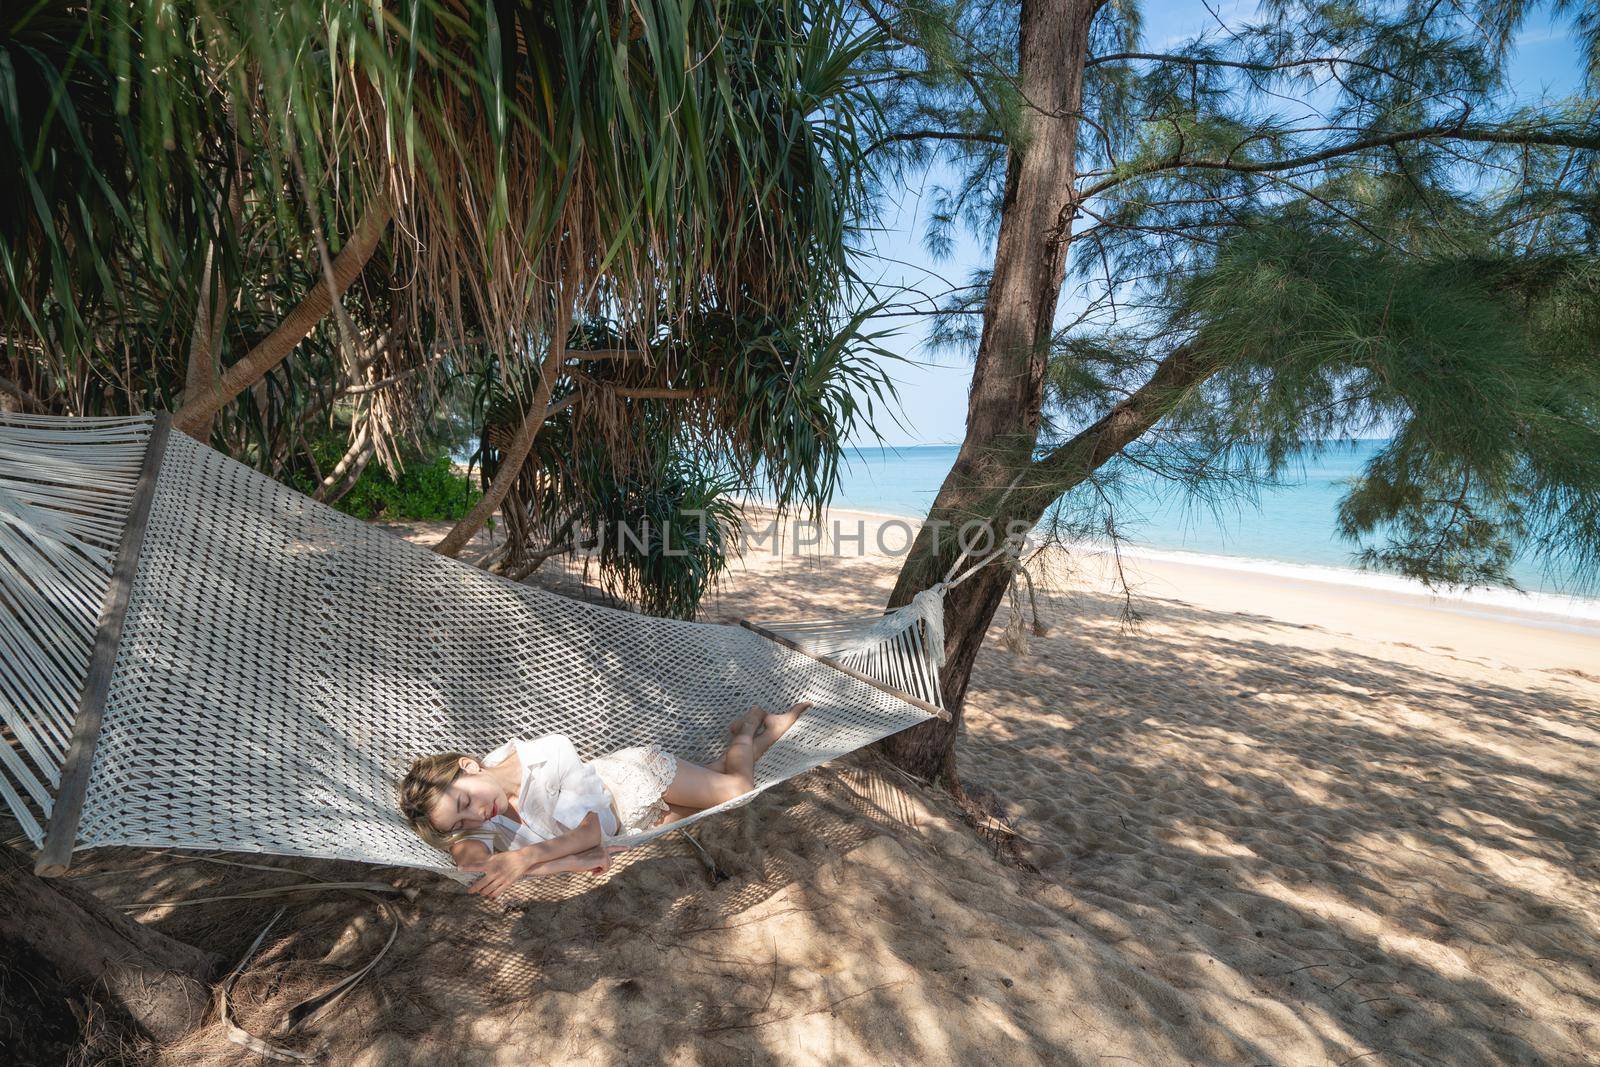 Woman lying in a hammock under the tree shadow on a beach. by sirawit99